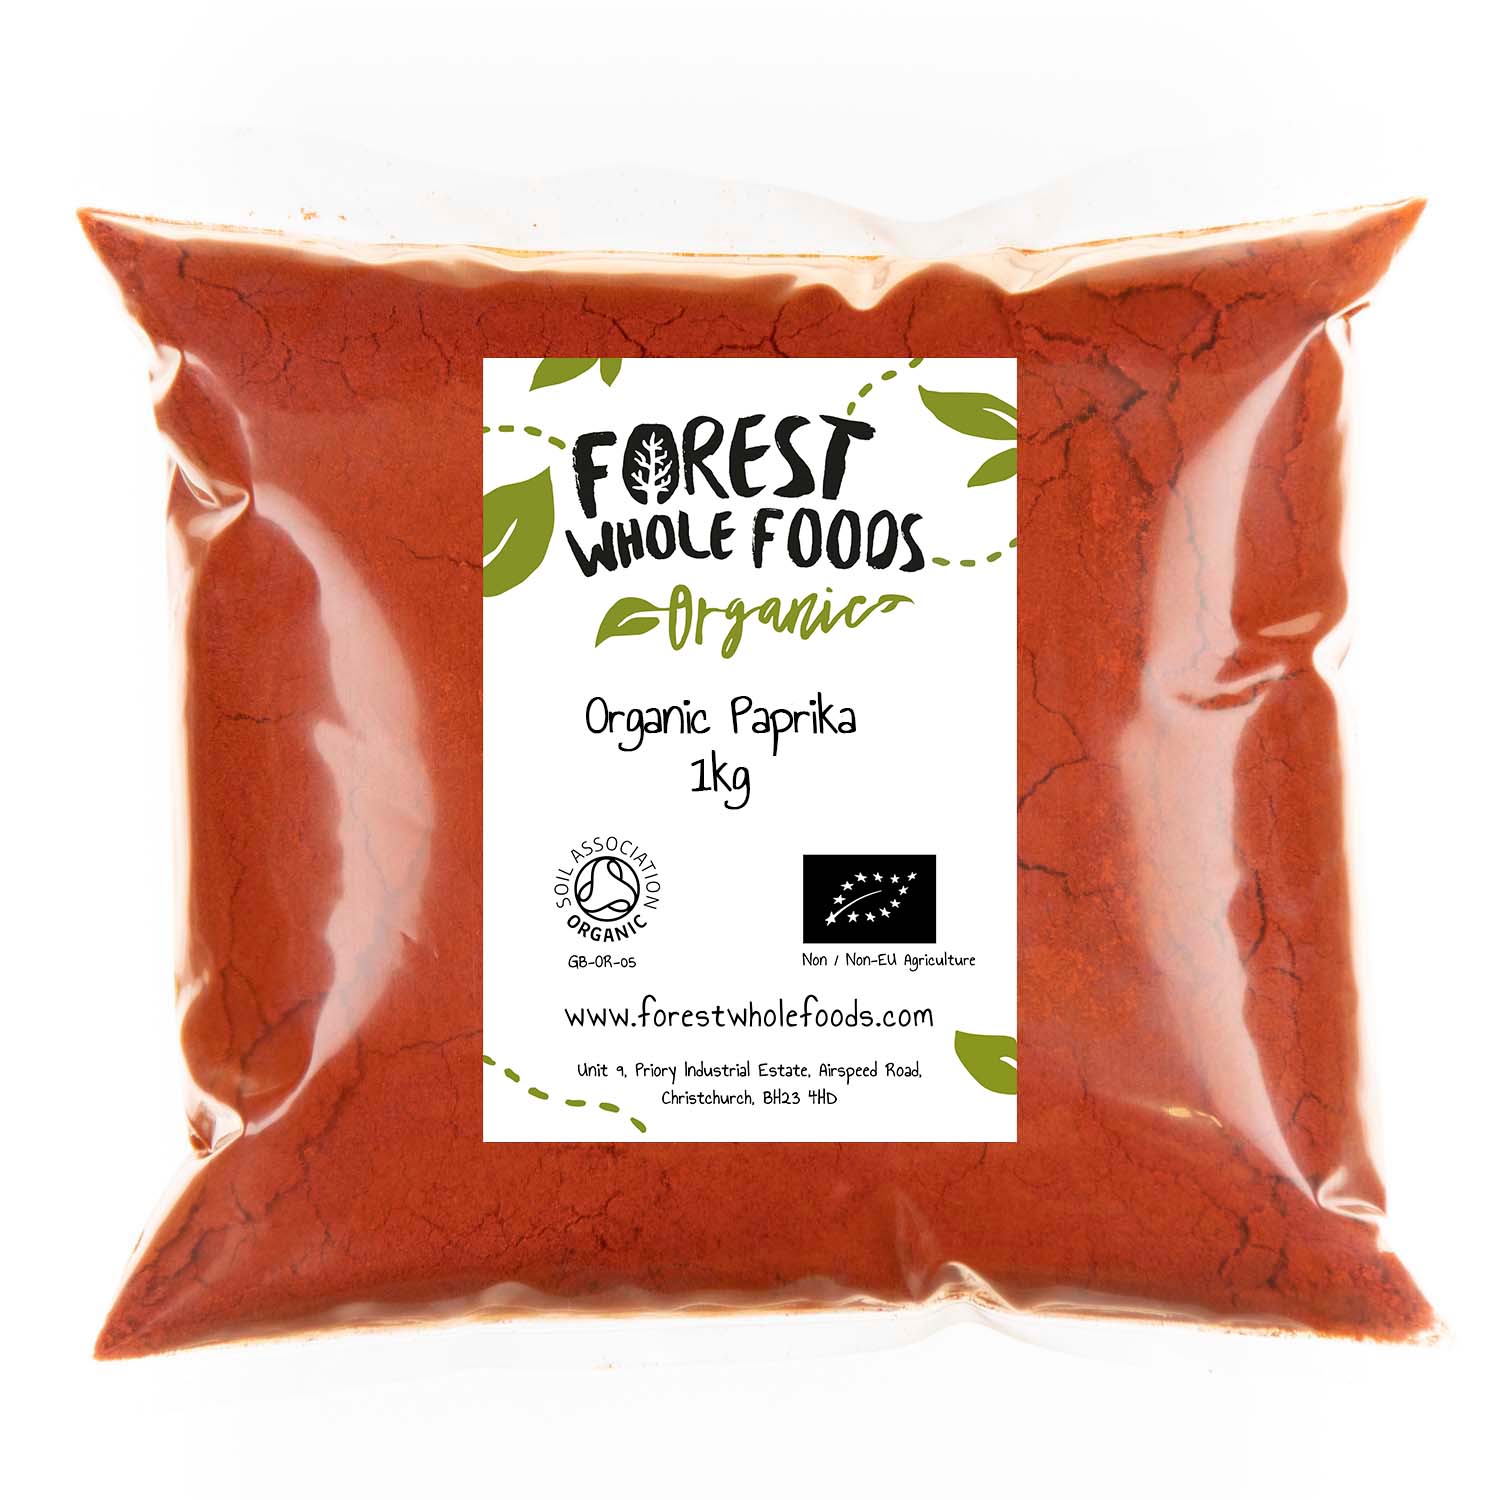 Organic Paprika 1kg